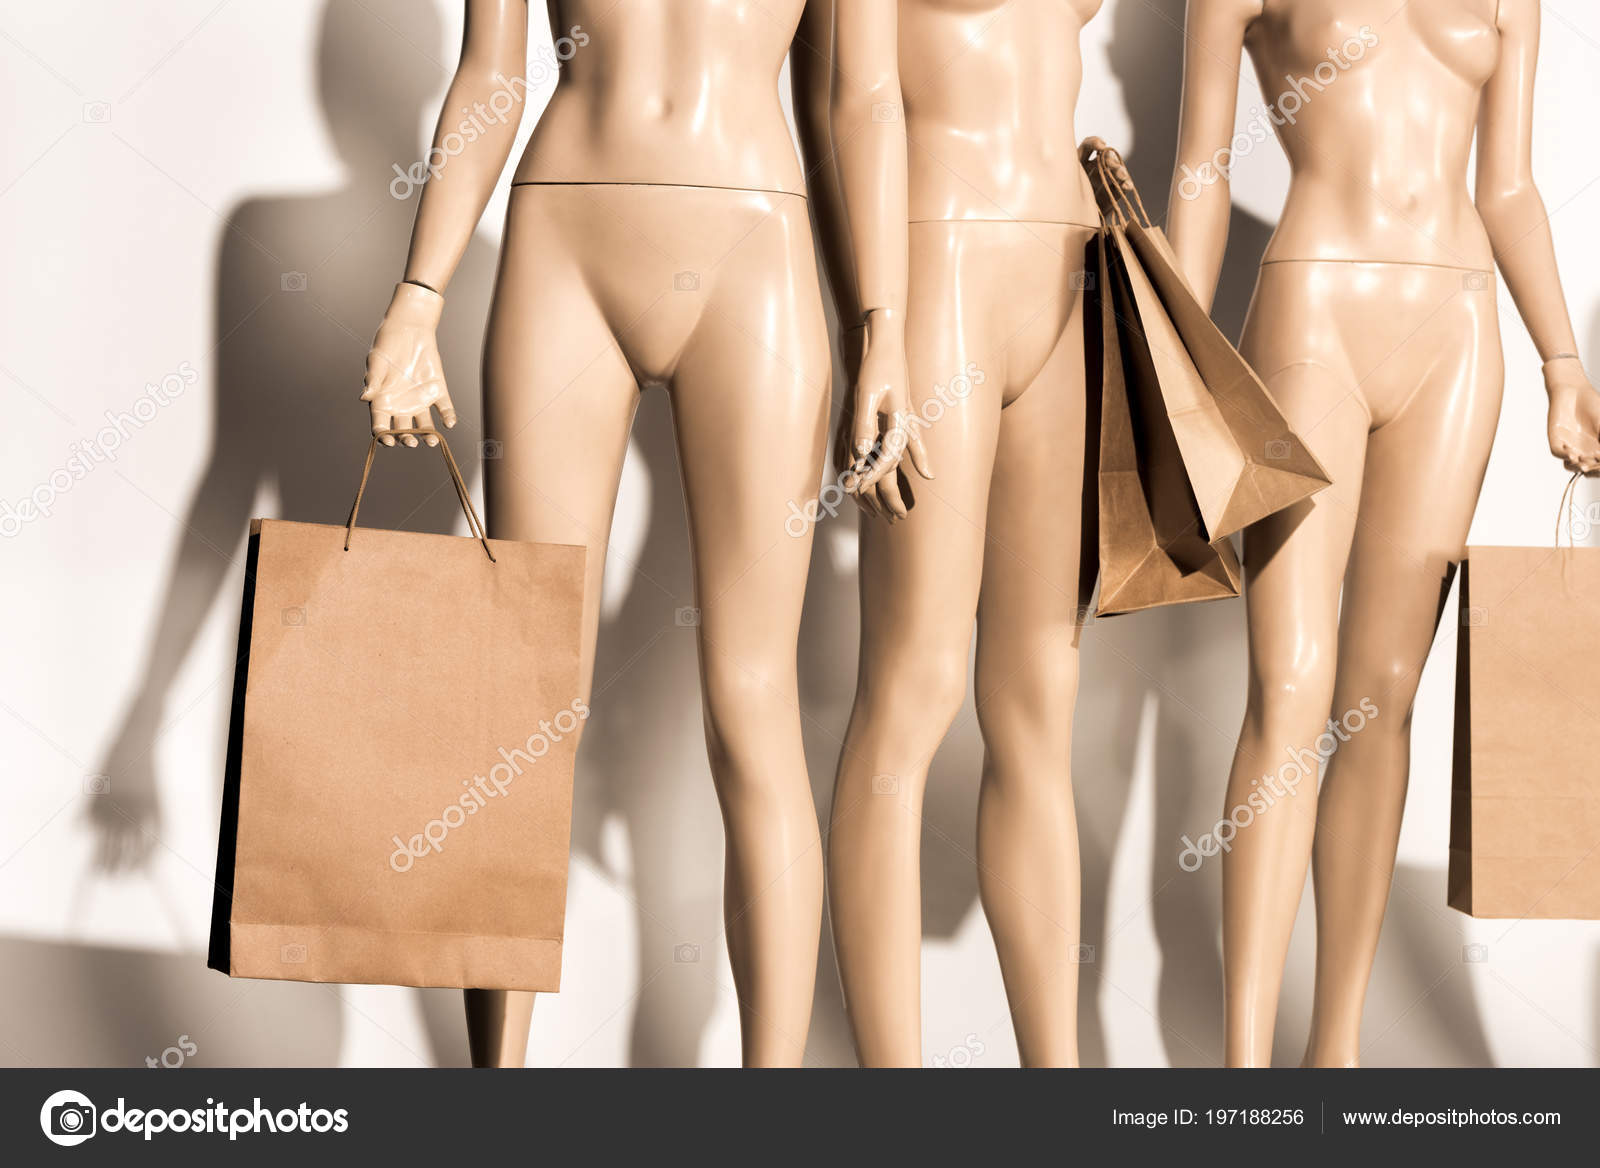 Niocle Austin Desnudo Naked Girls Shopping